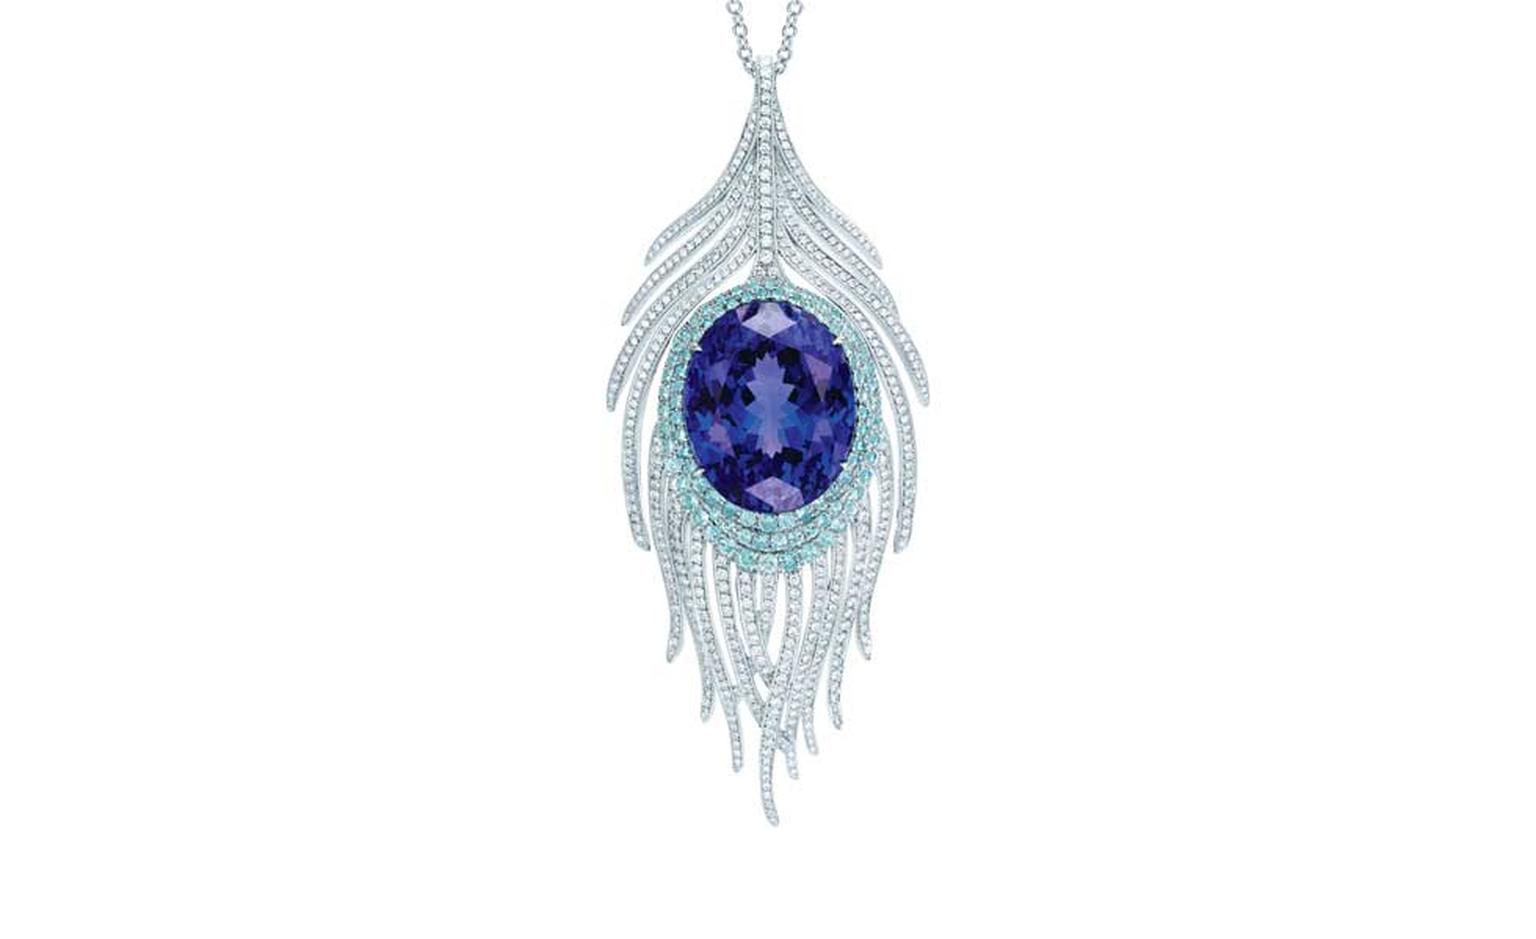 Tiffany Peacock pendant featuring diamonds, aquamarines and a central tanzanite.